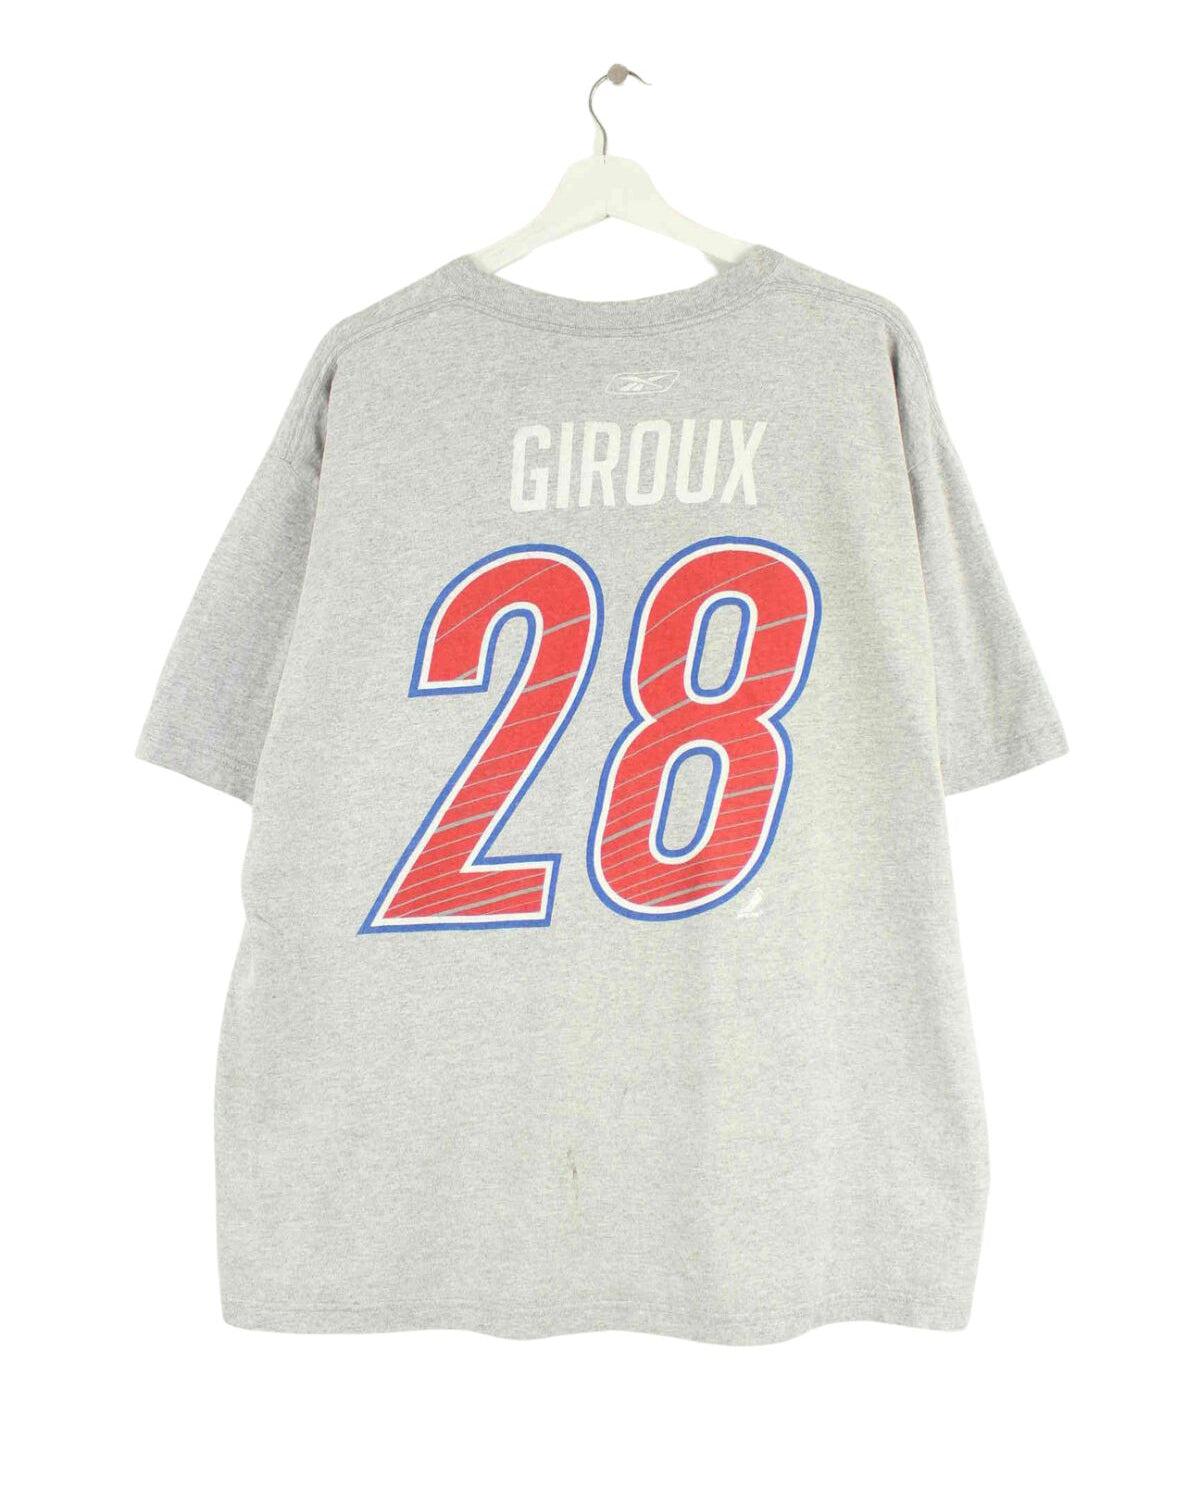 Reebok NHL All Stars Giroux #28 Print T-Shirt Grau XL (back image)